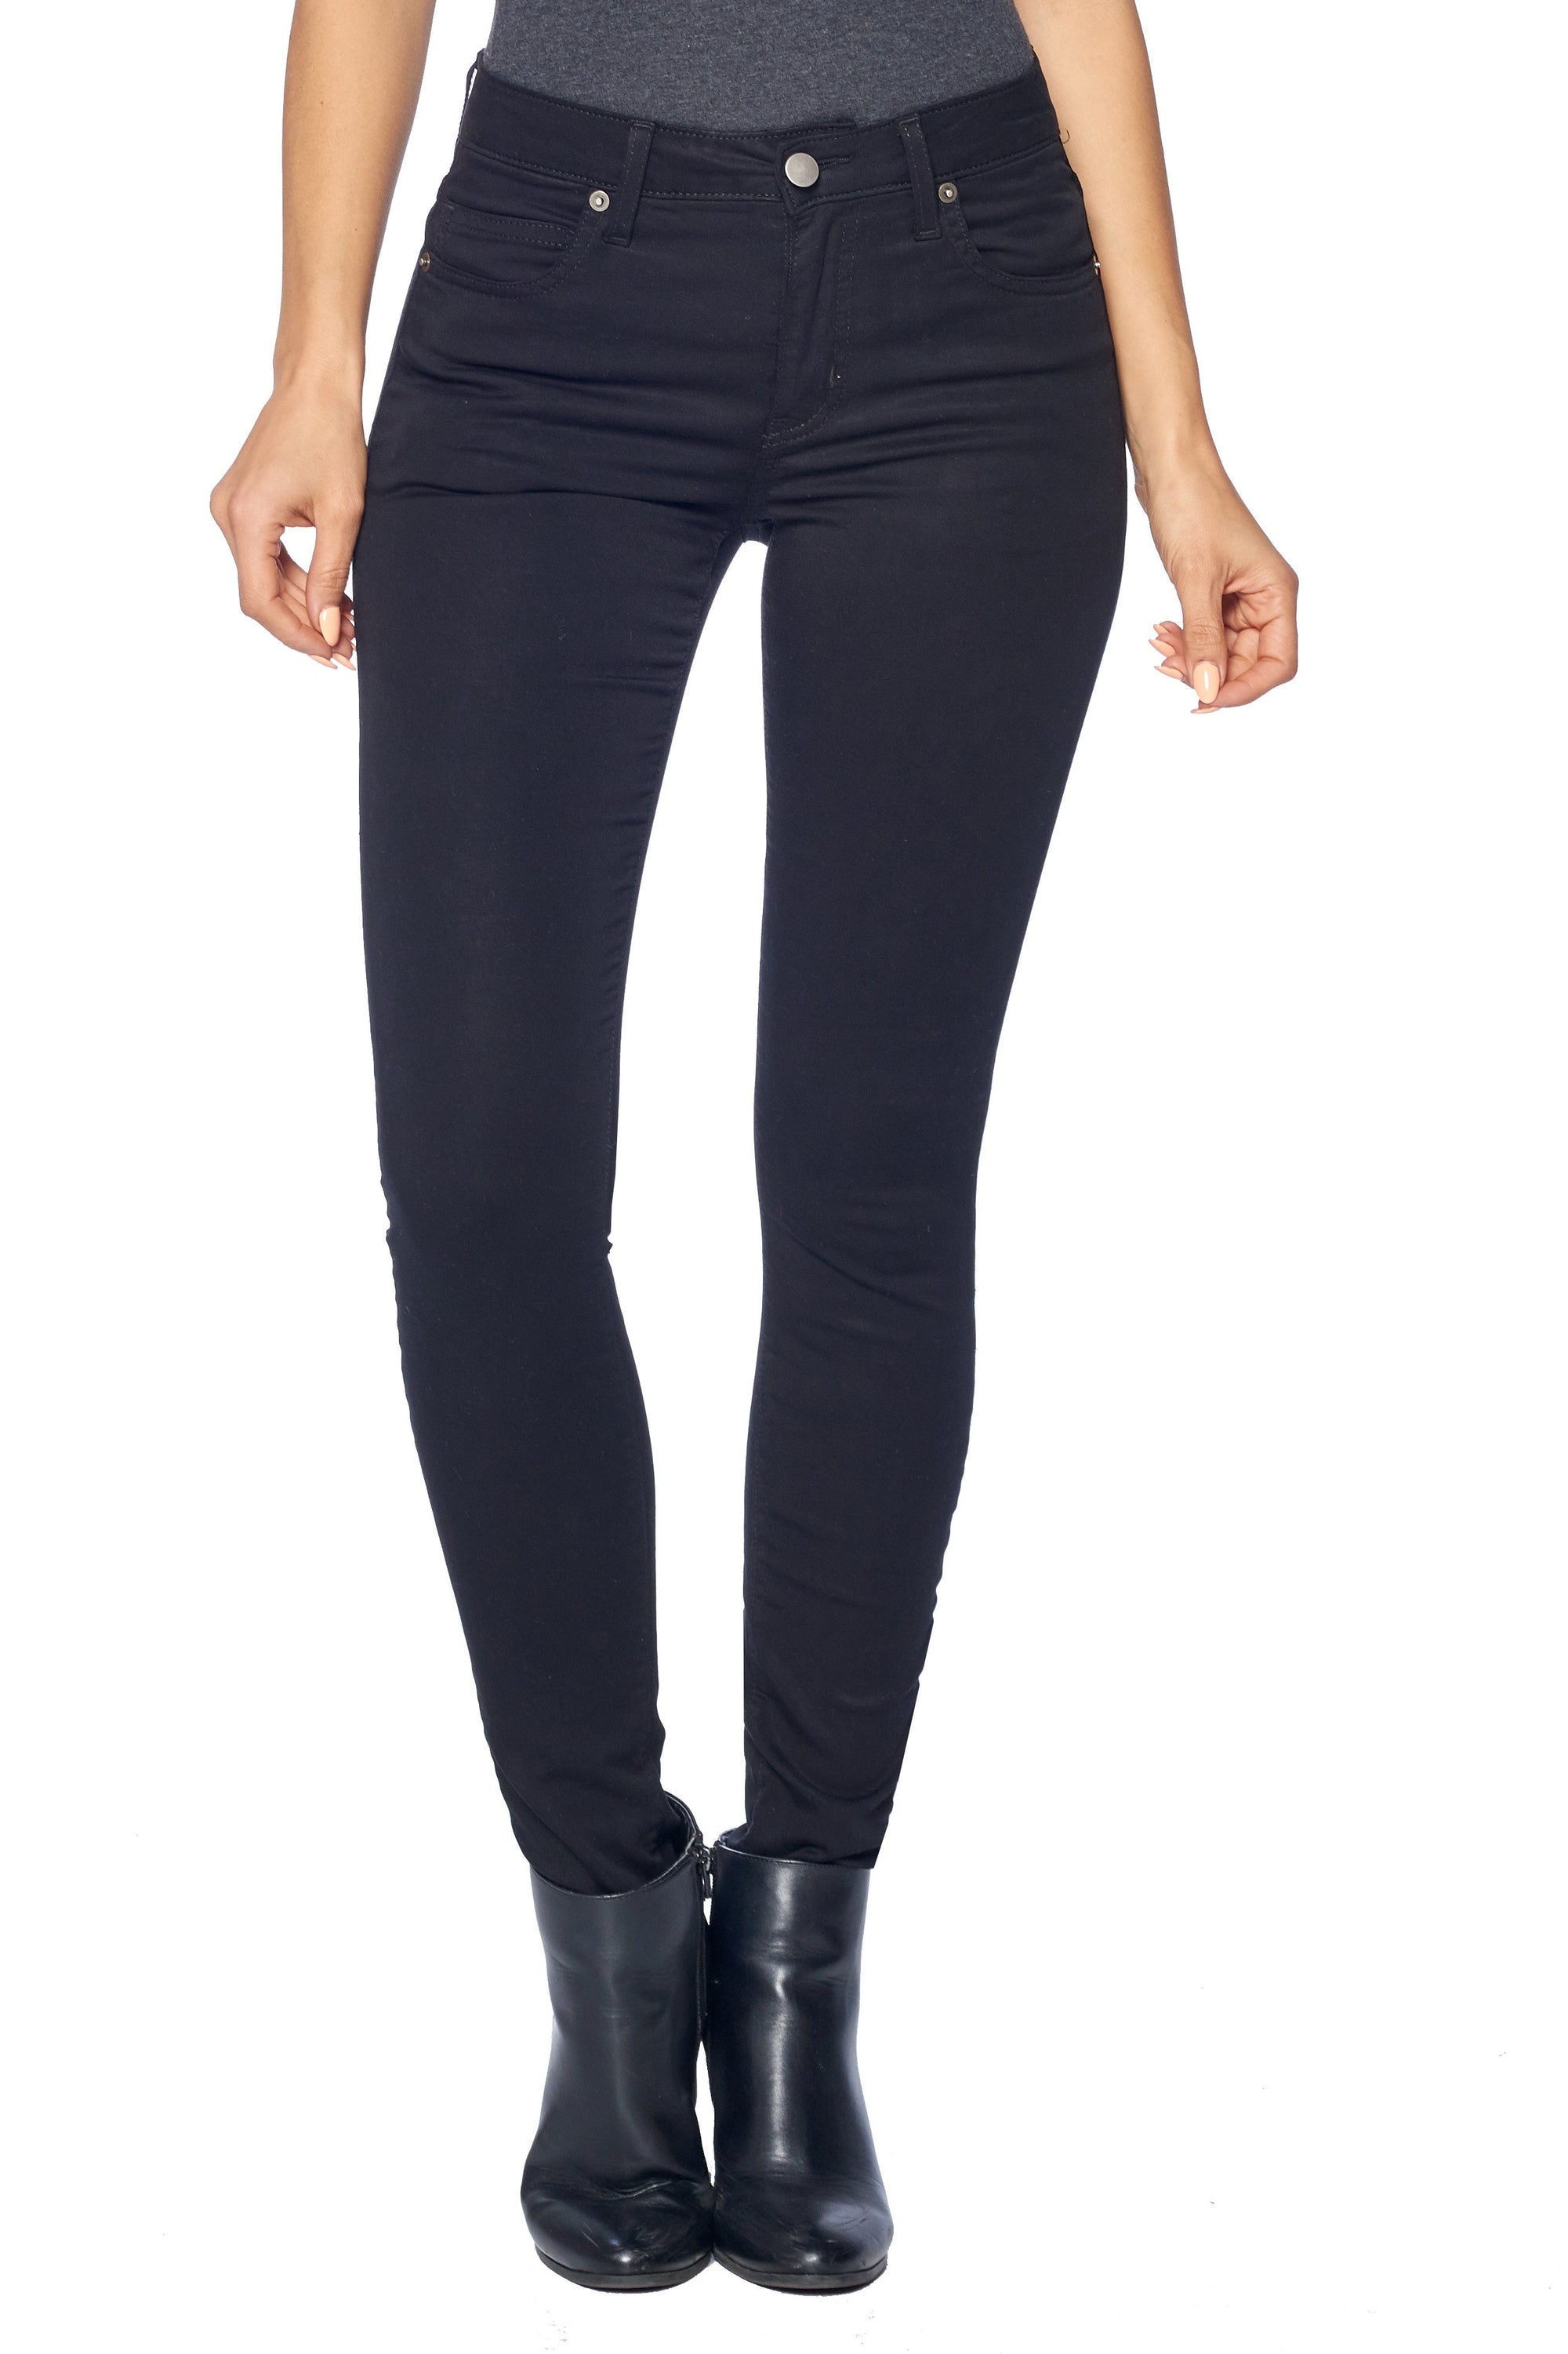 J Brand Low-Rise Skinny Leg Jeans - Black, 7.75 Rise Jeans